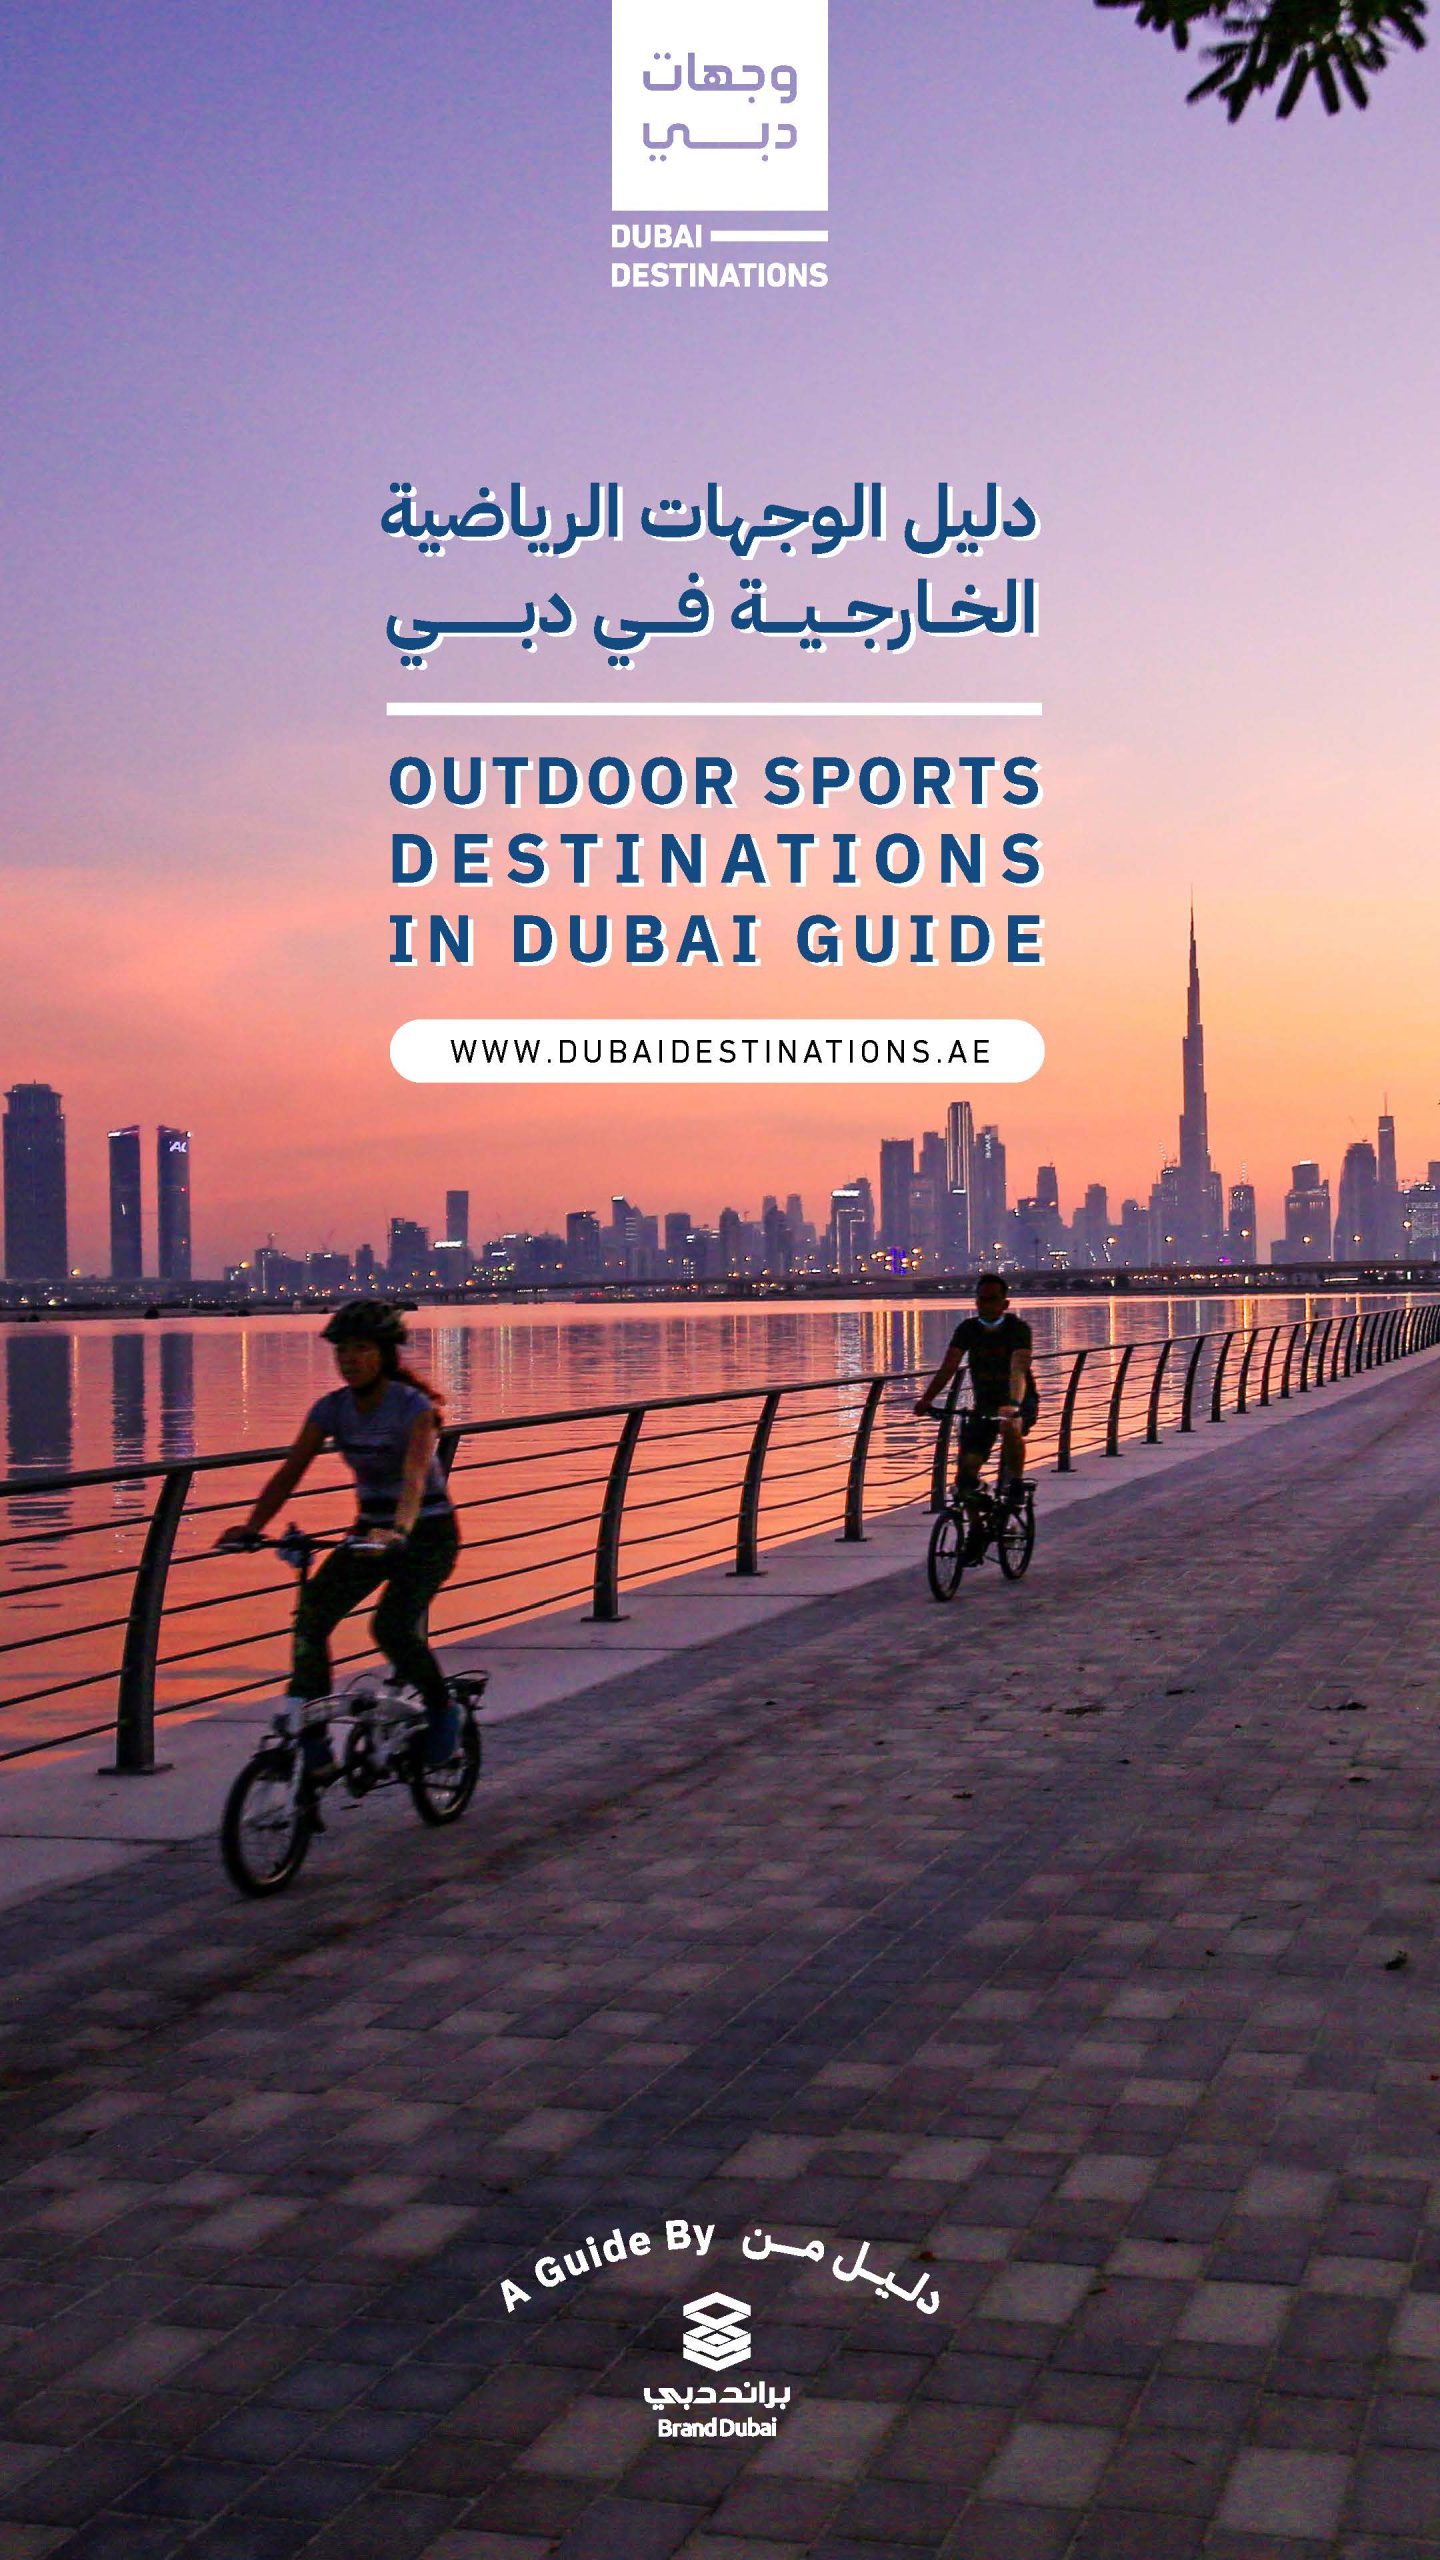 #DubaiDestinations